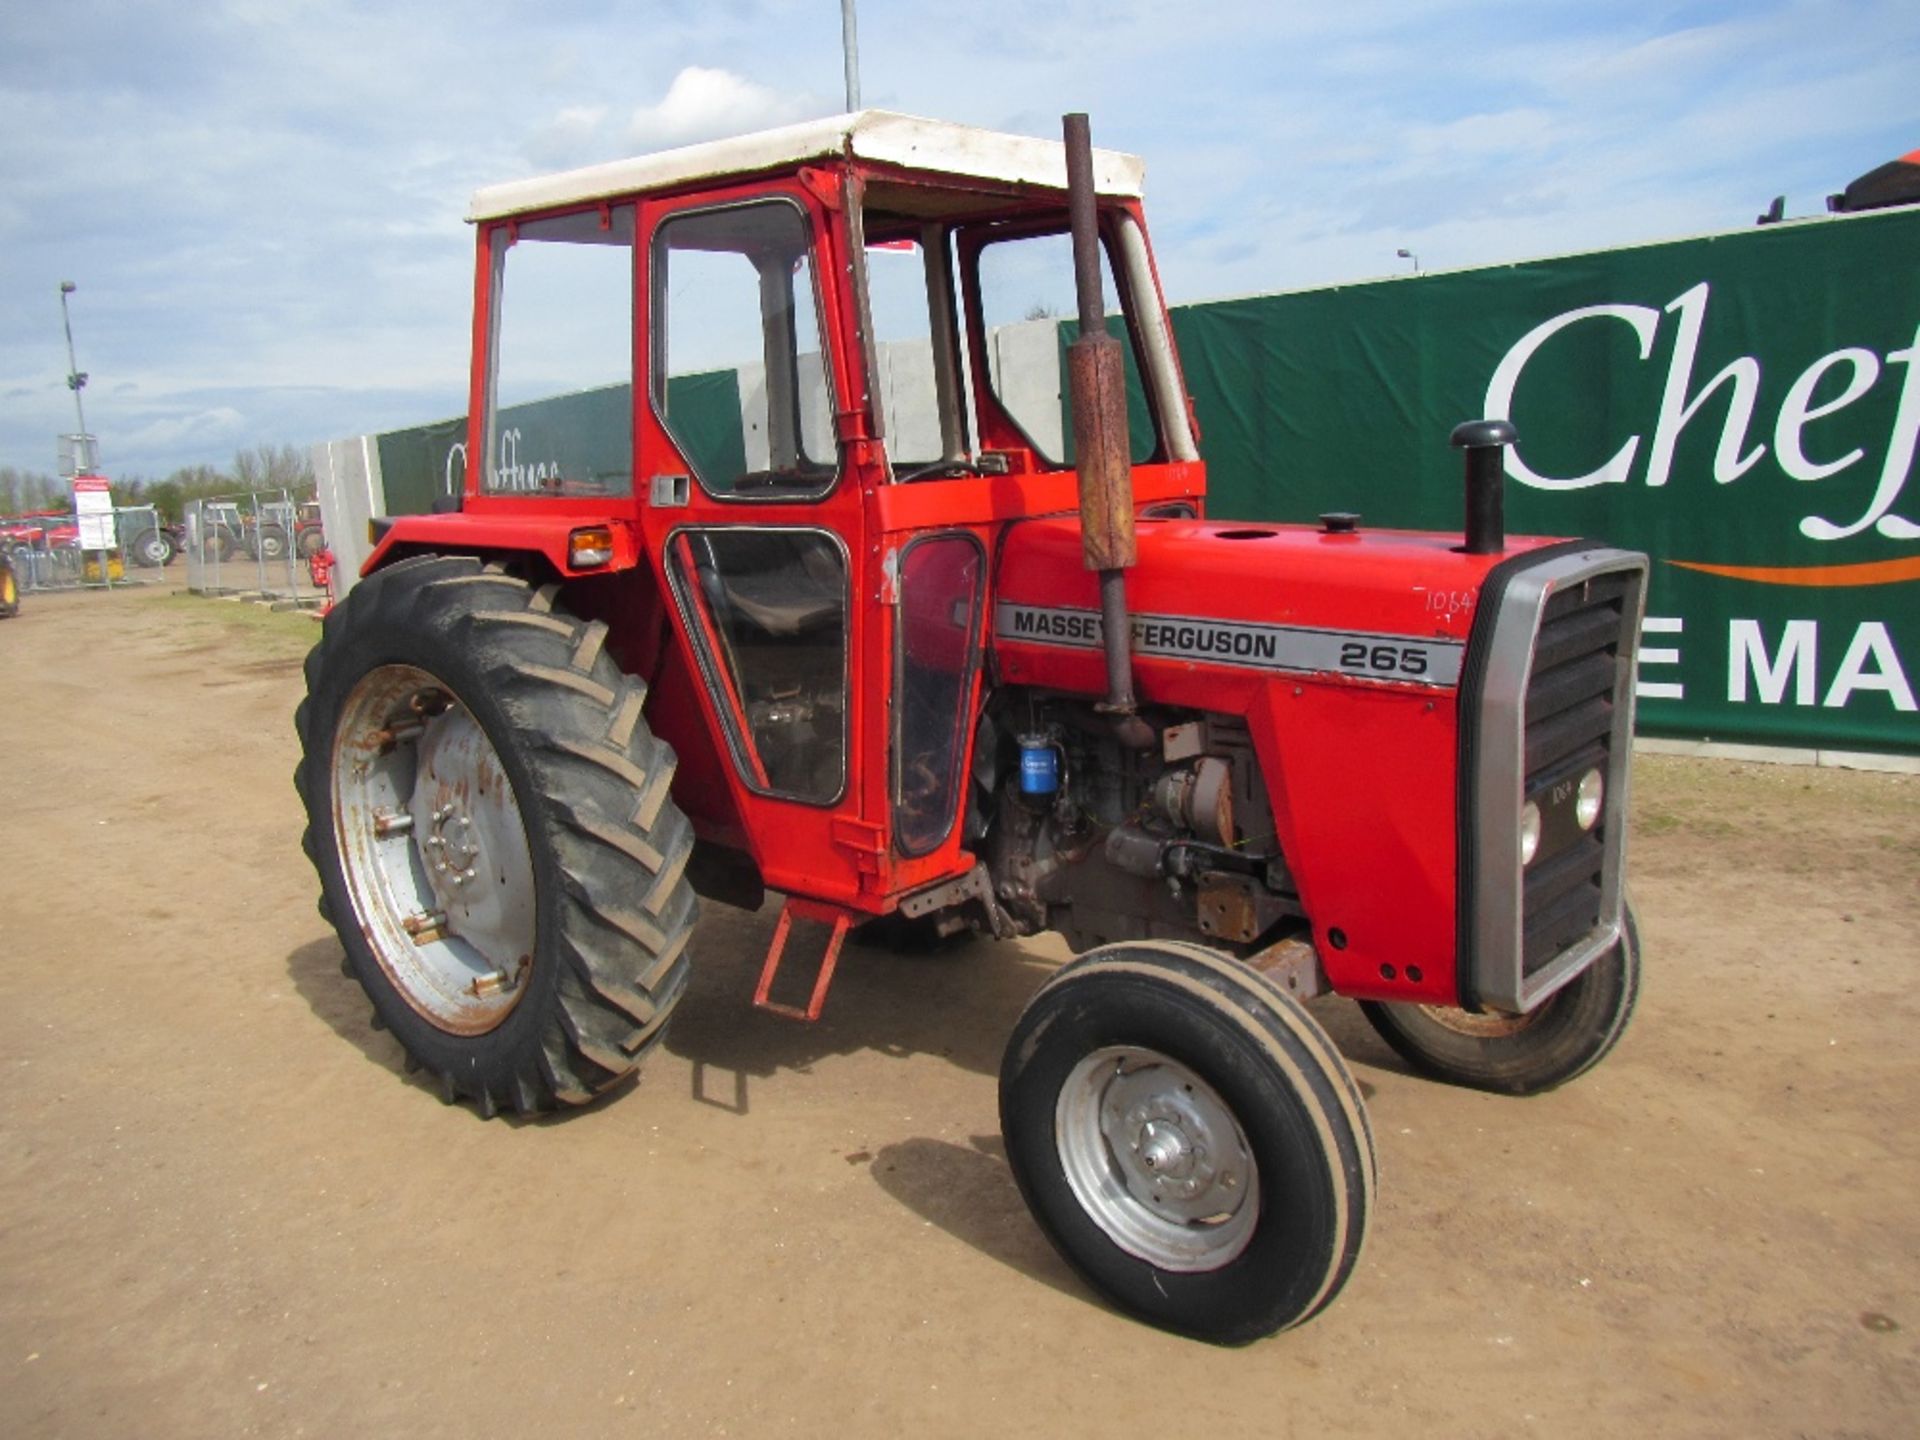 Massey Ferguson 265 Tractor - Image 3 of 15